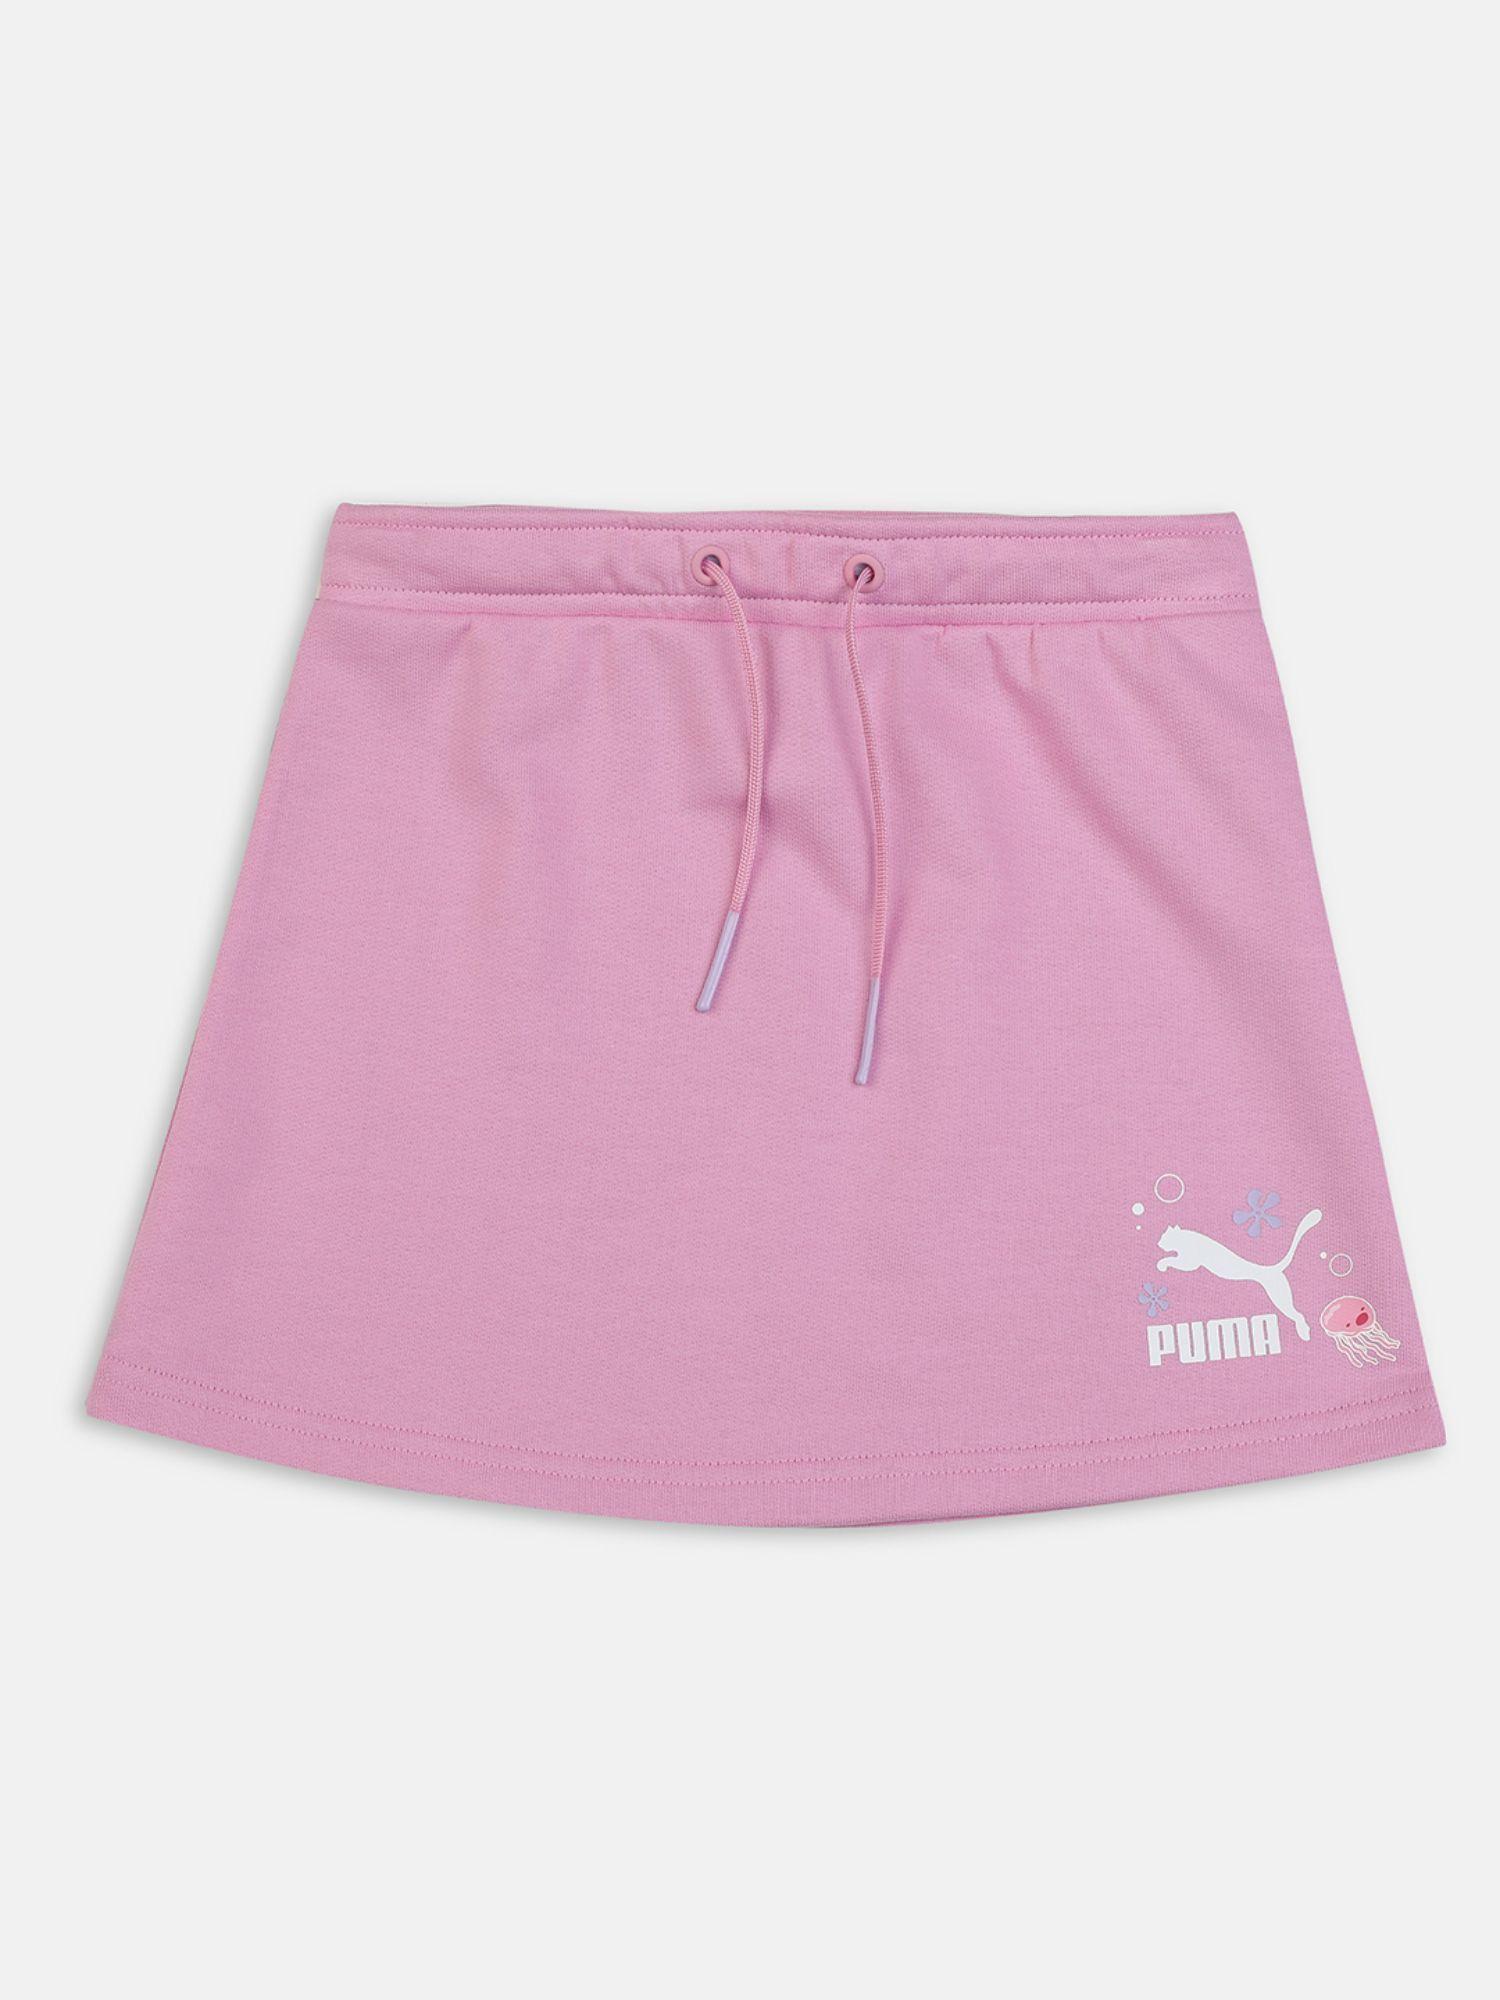 x-spongebob-girls-pink-skirt